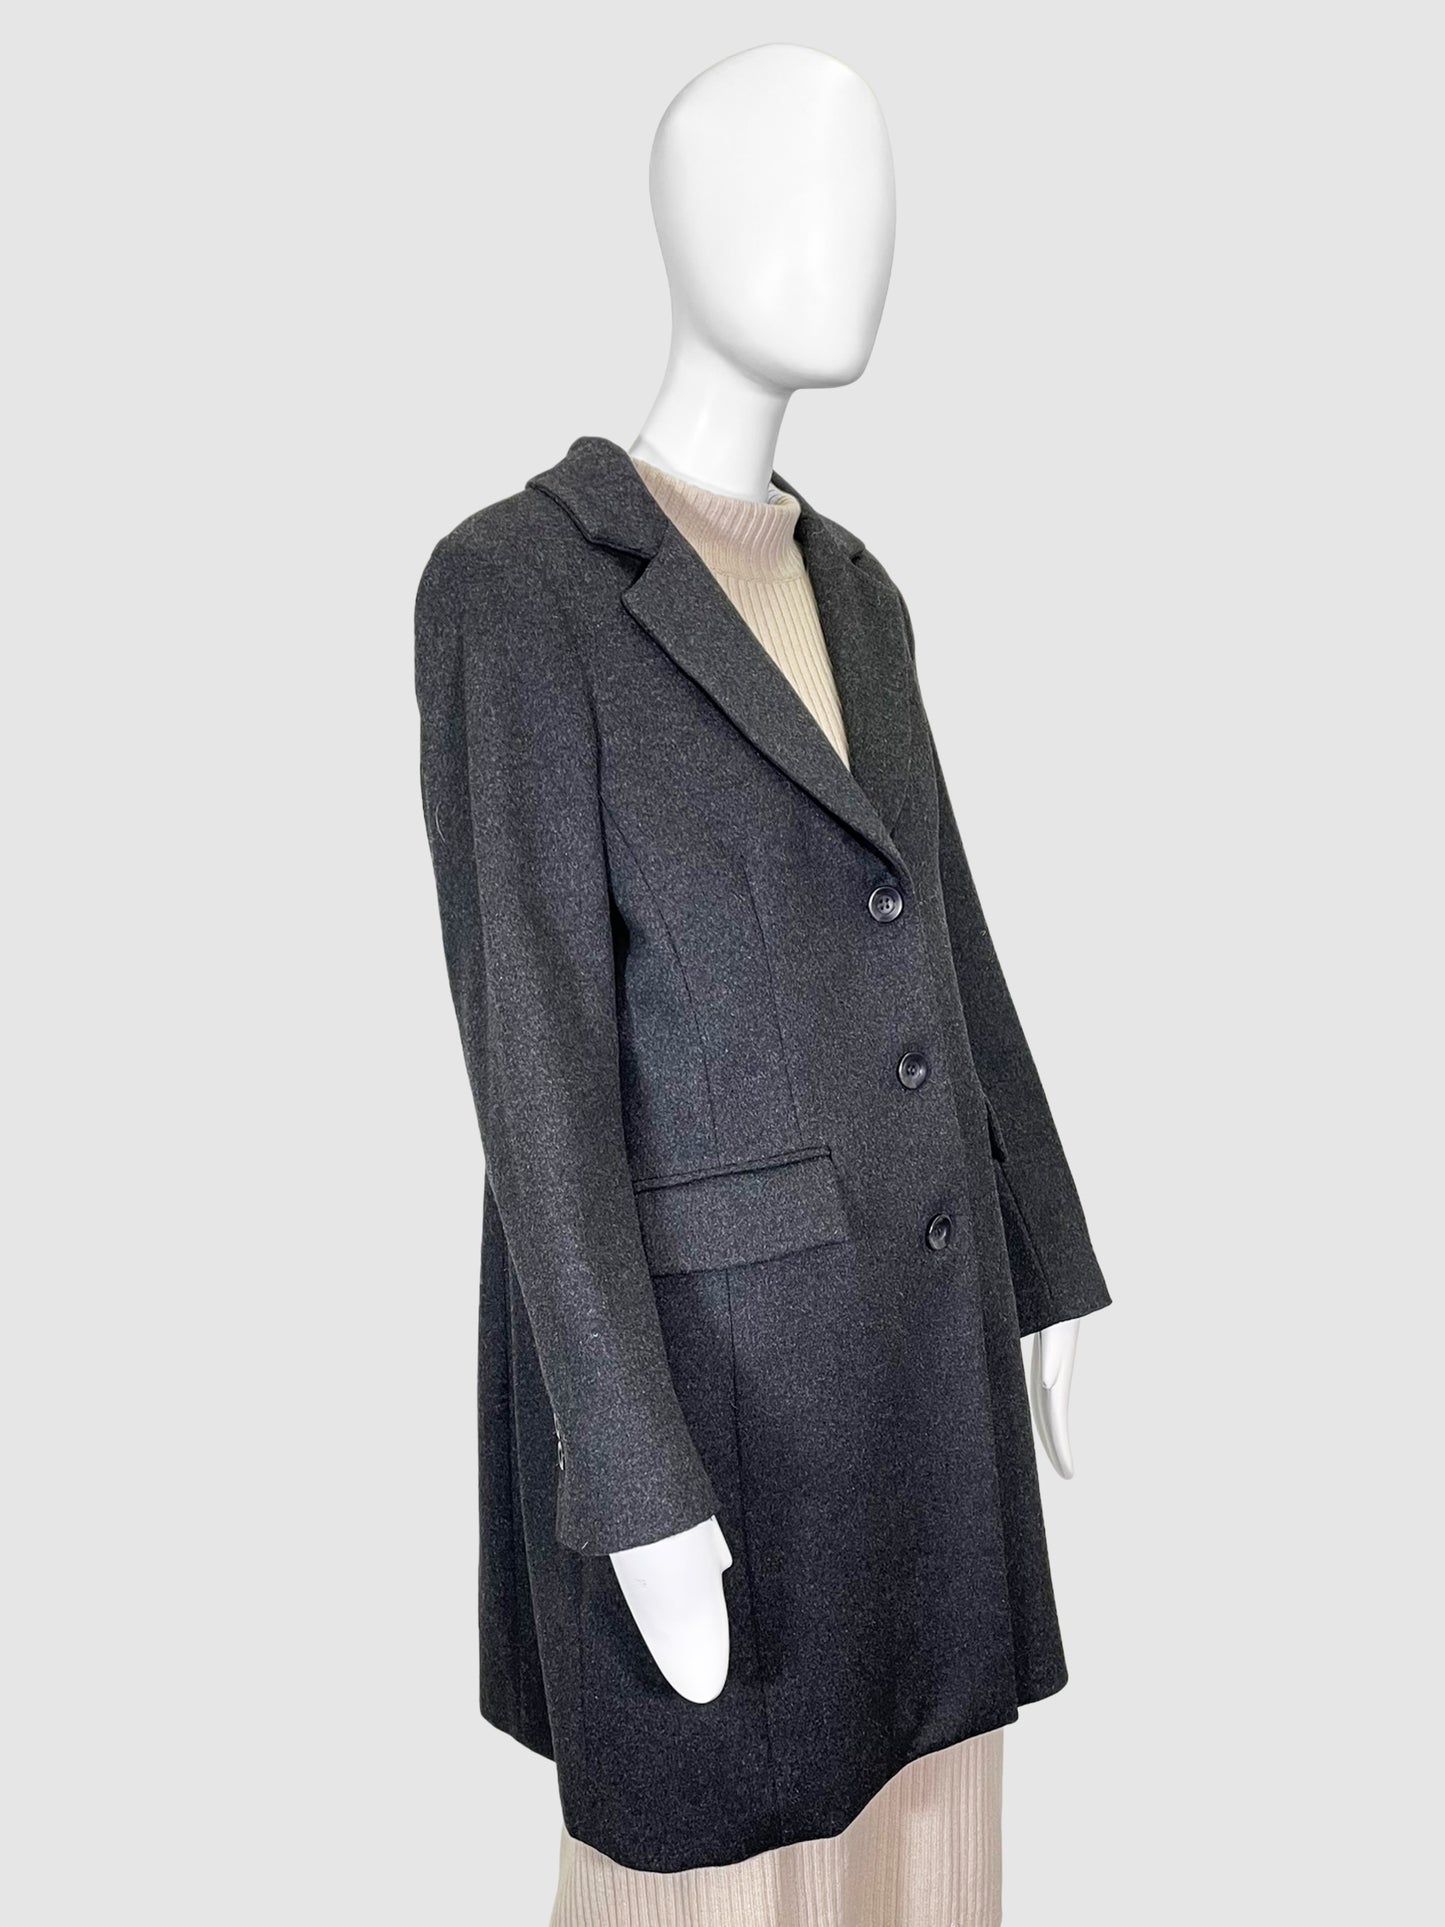 David Findlay Tailored Wool Coat - Size L